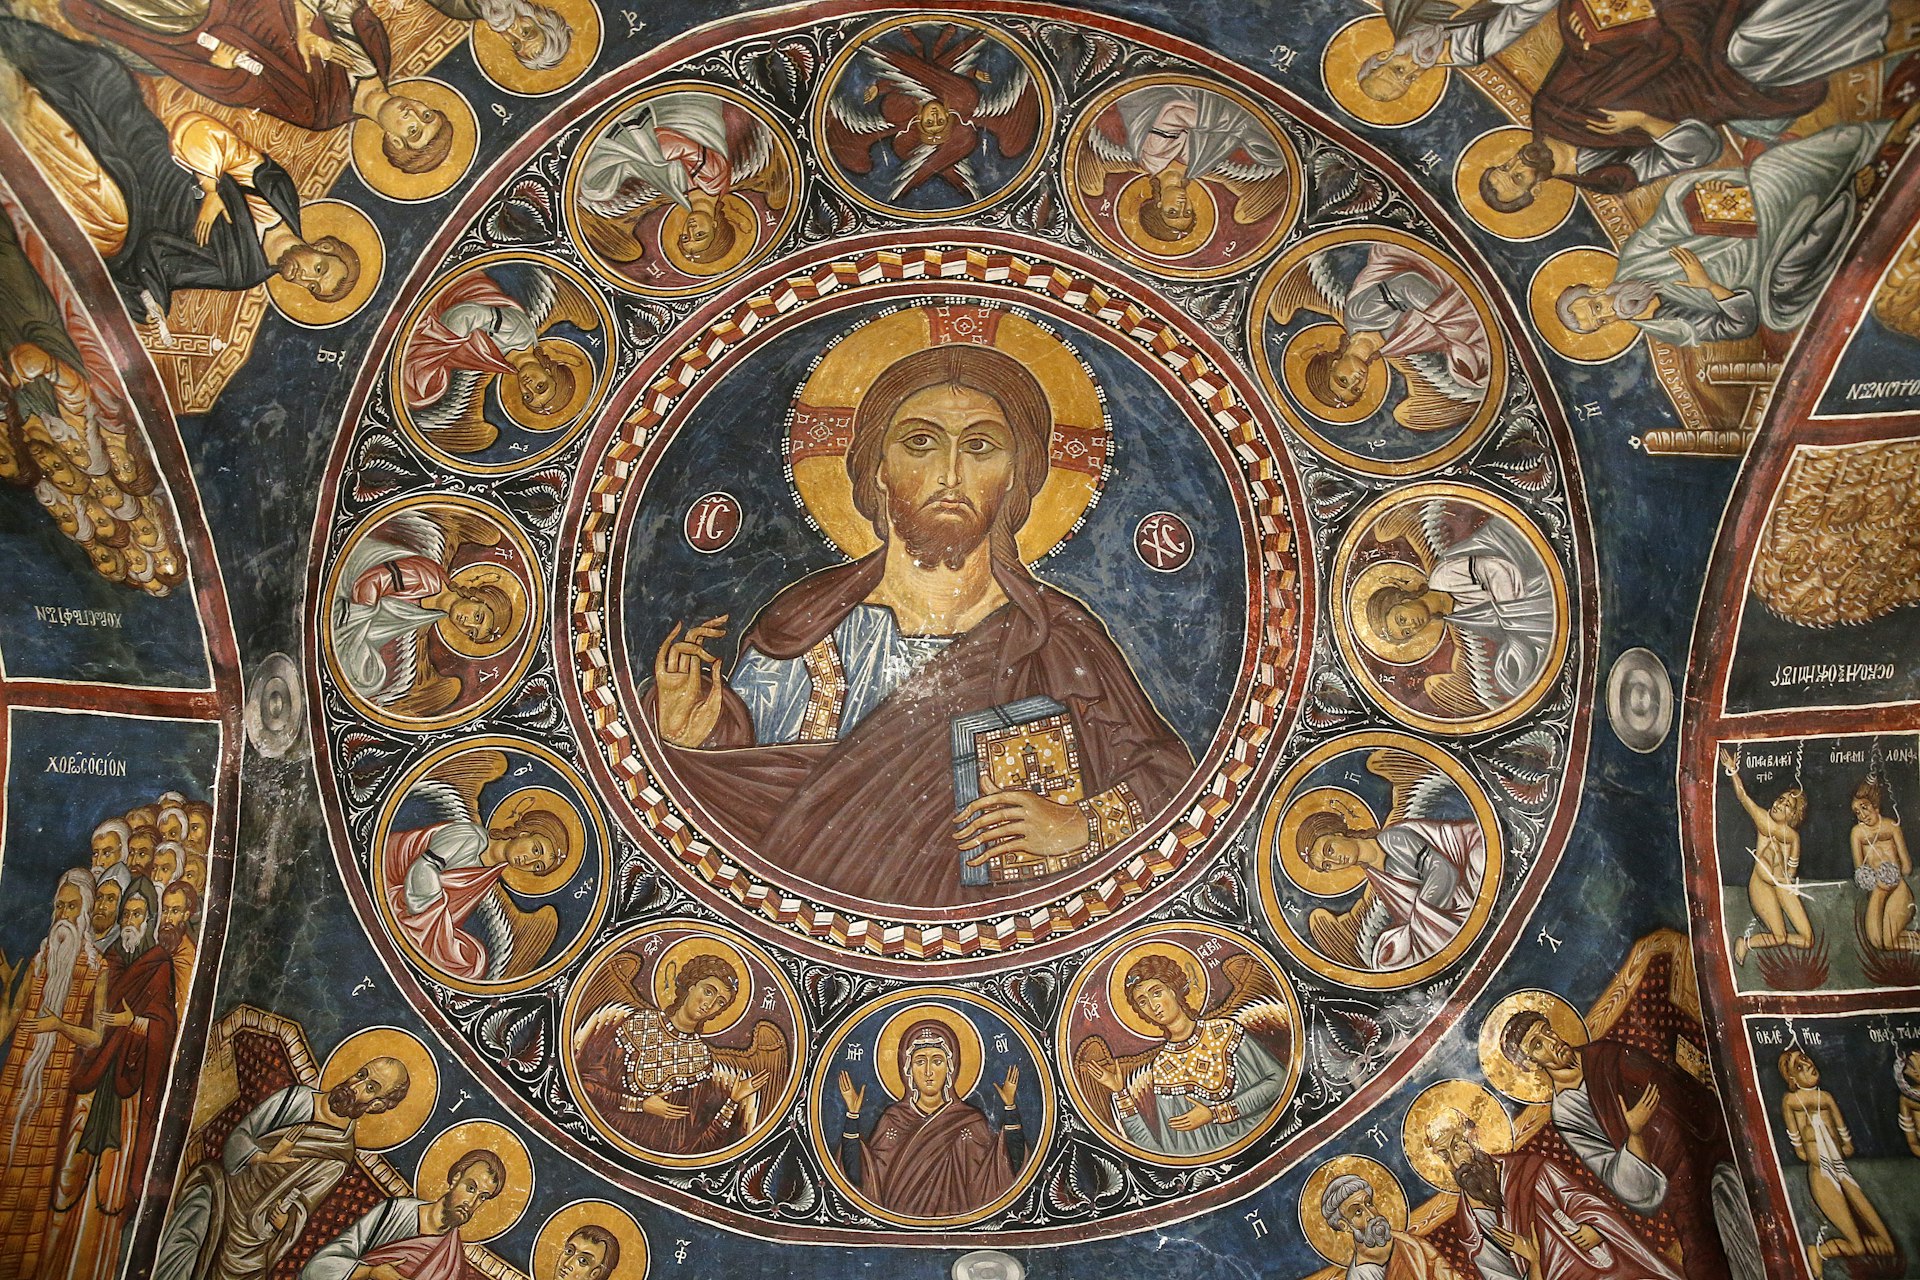 Byzantine-era ceiling murals in the church of Panagia tis Asinou